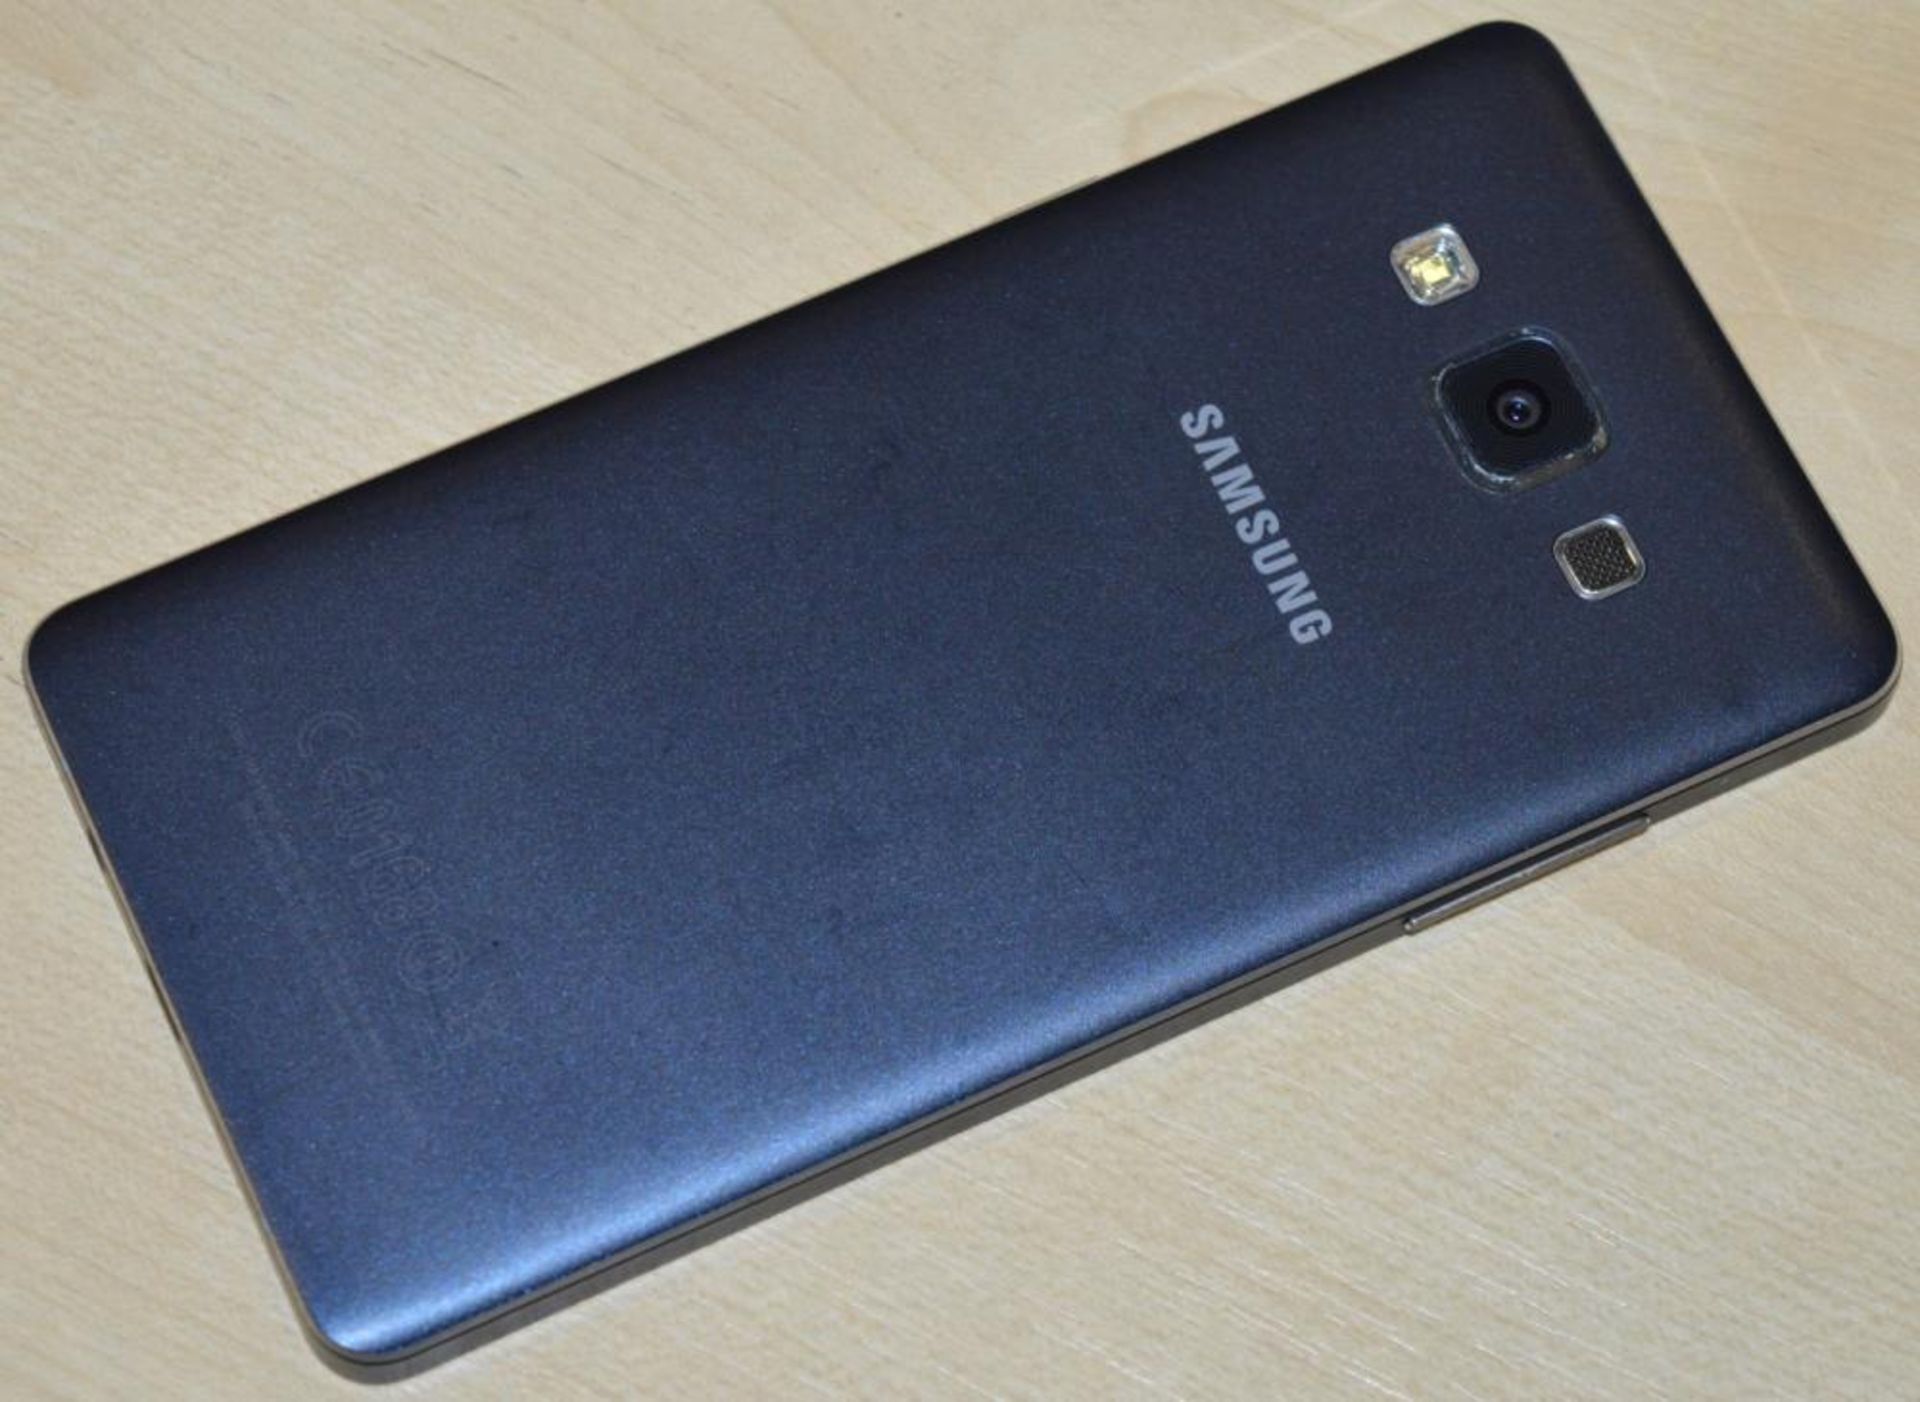 1 x Samsung Galaxy A5 16gb Smart Phone - Model SM-A500FU - Midnight Black - CL285 - Ref J0000 - - Image 2 of 2